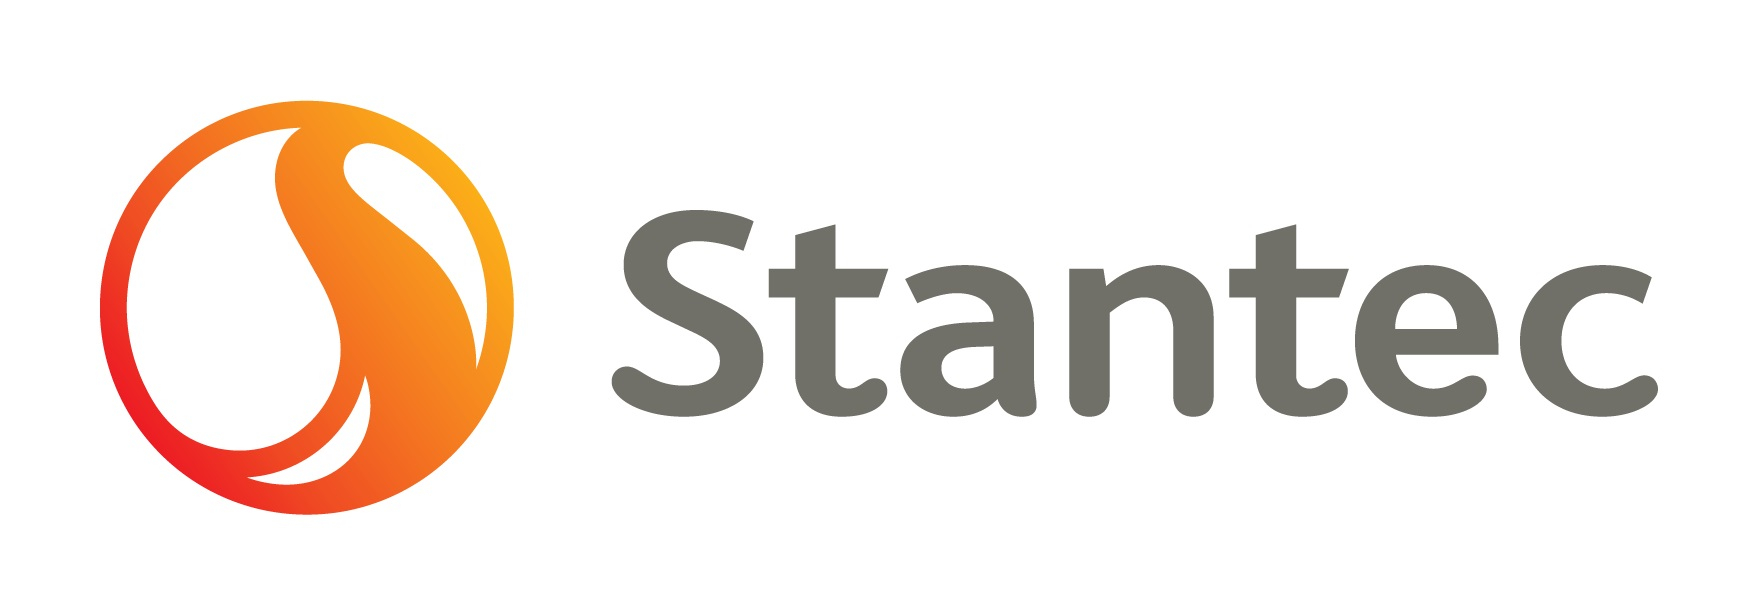 Stantec Consulting